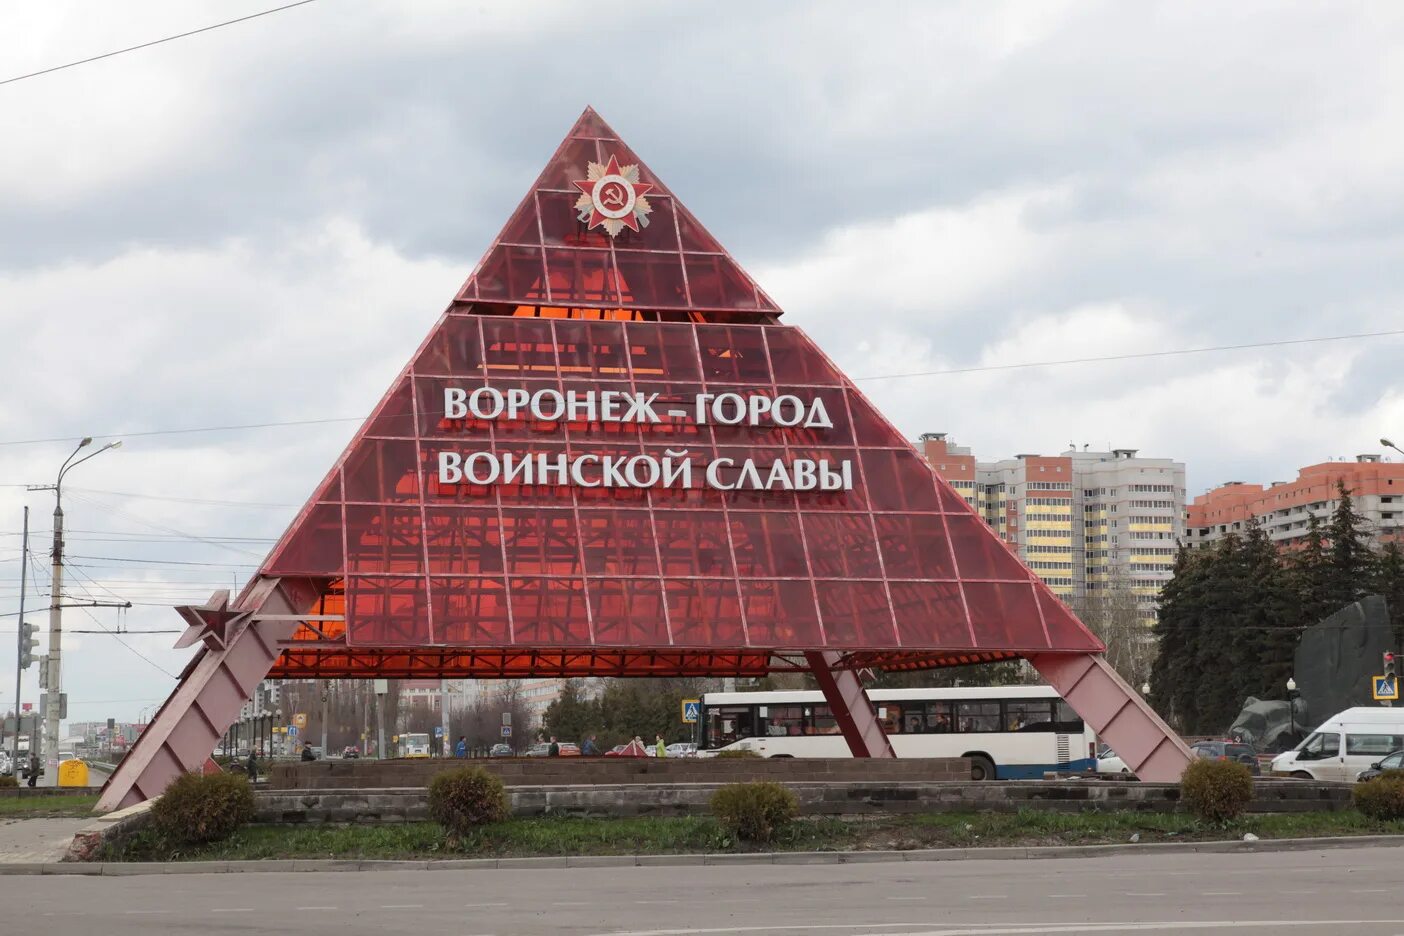 Monument of glory voronezh #24